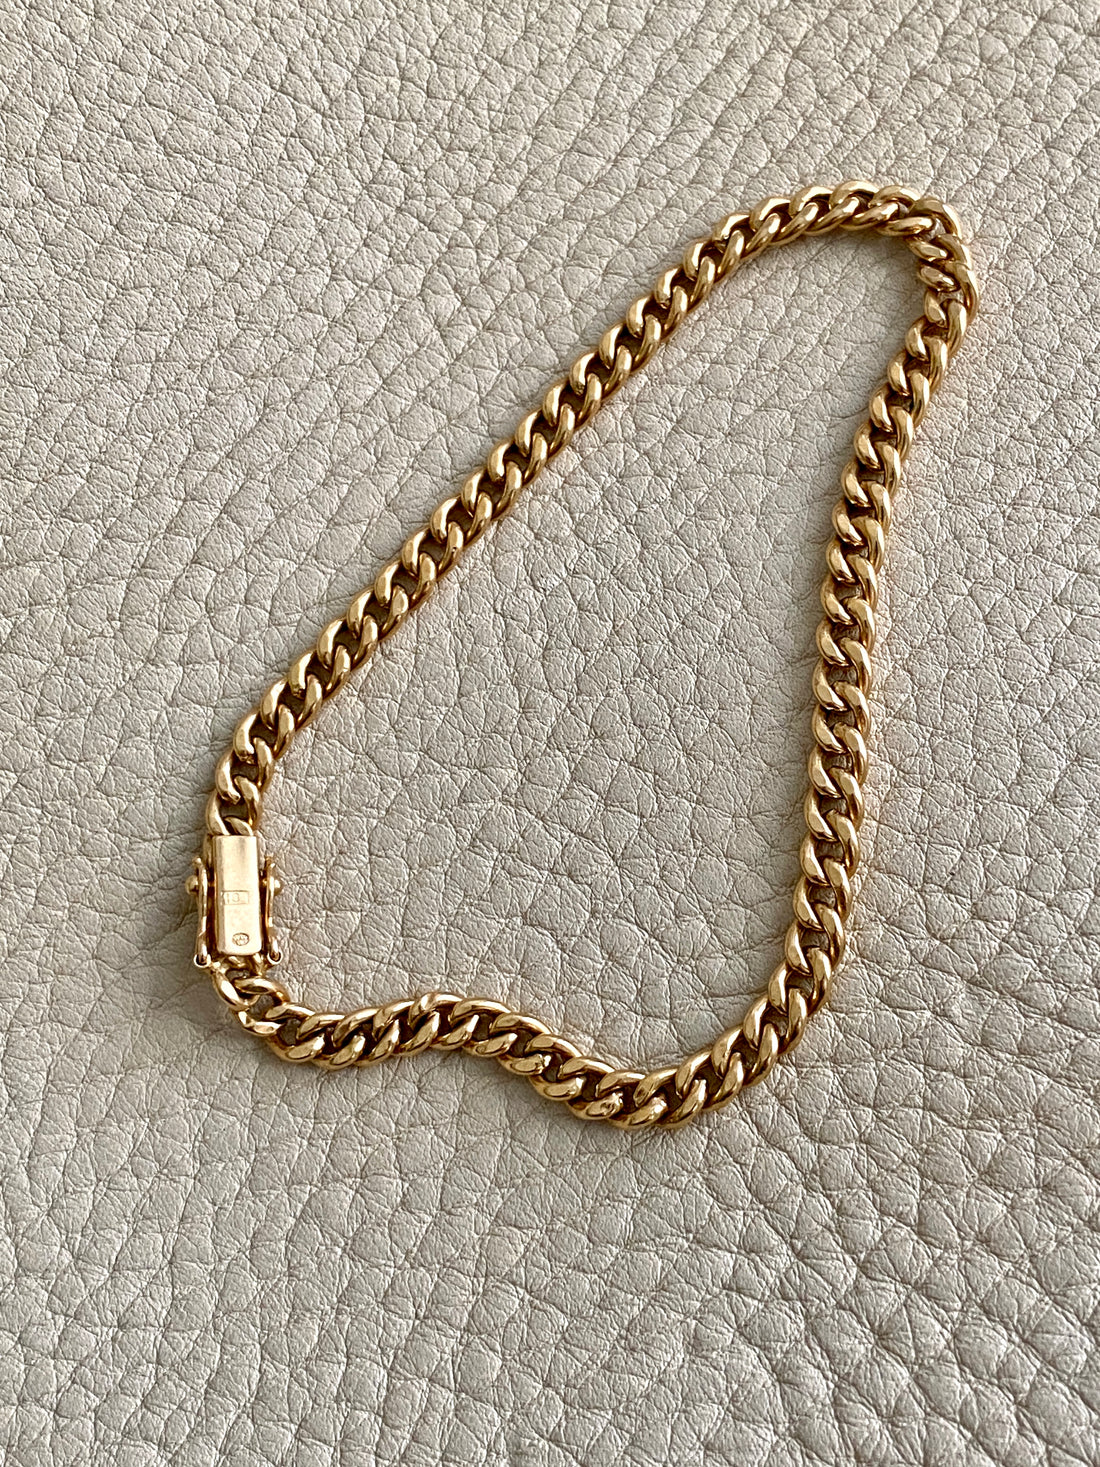 18k yellow gold vintage curb link bracelet - 7.8 inch length